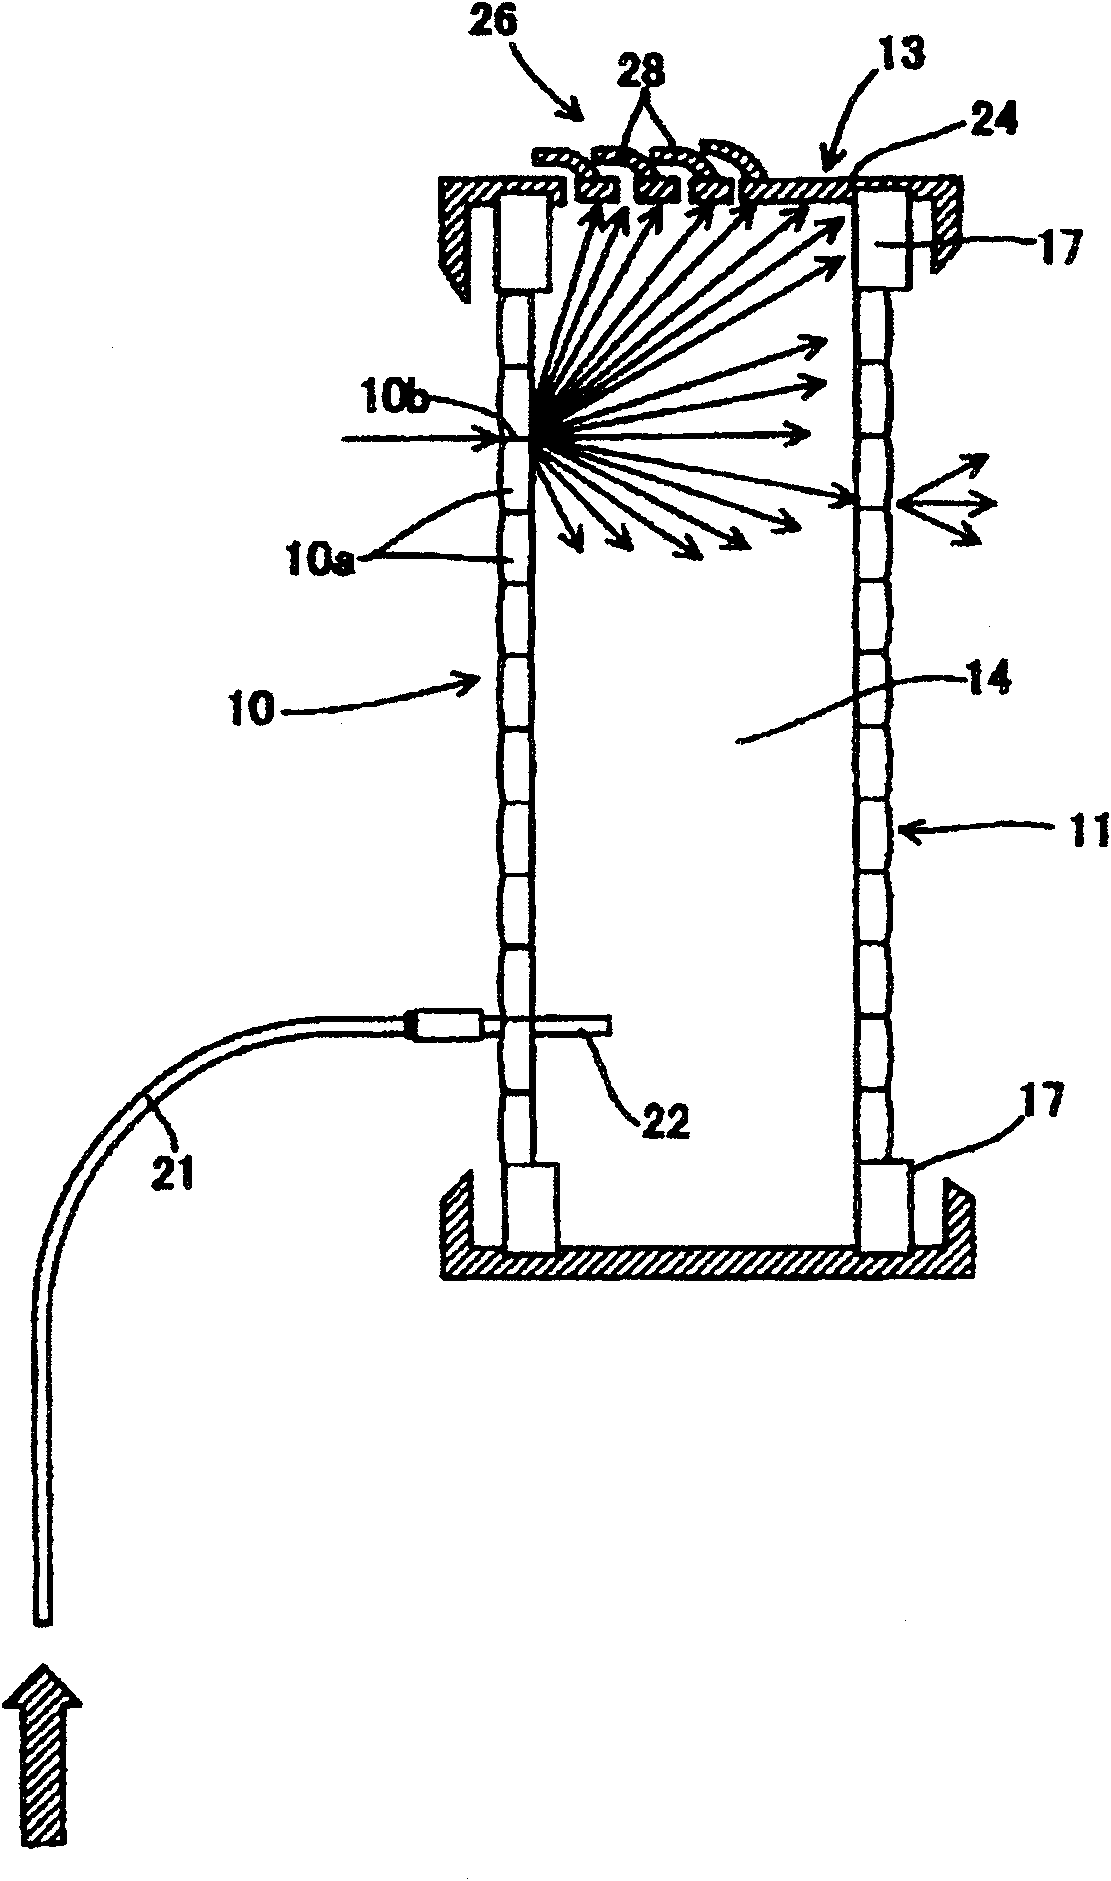 Integrator and light irradiation apparatus